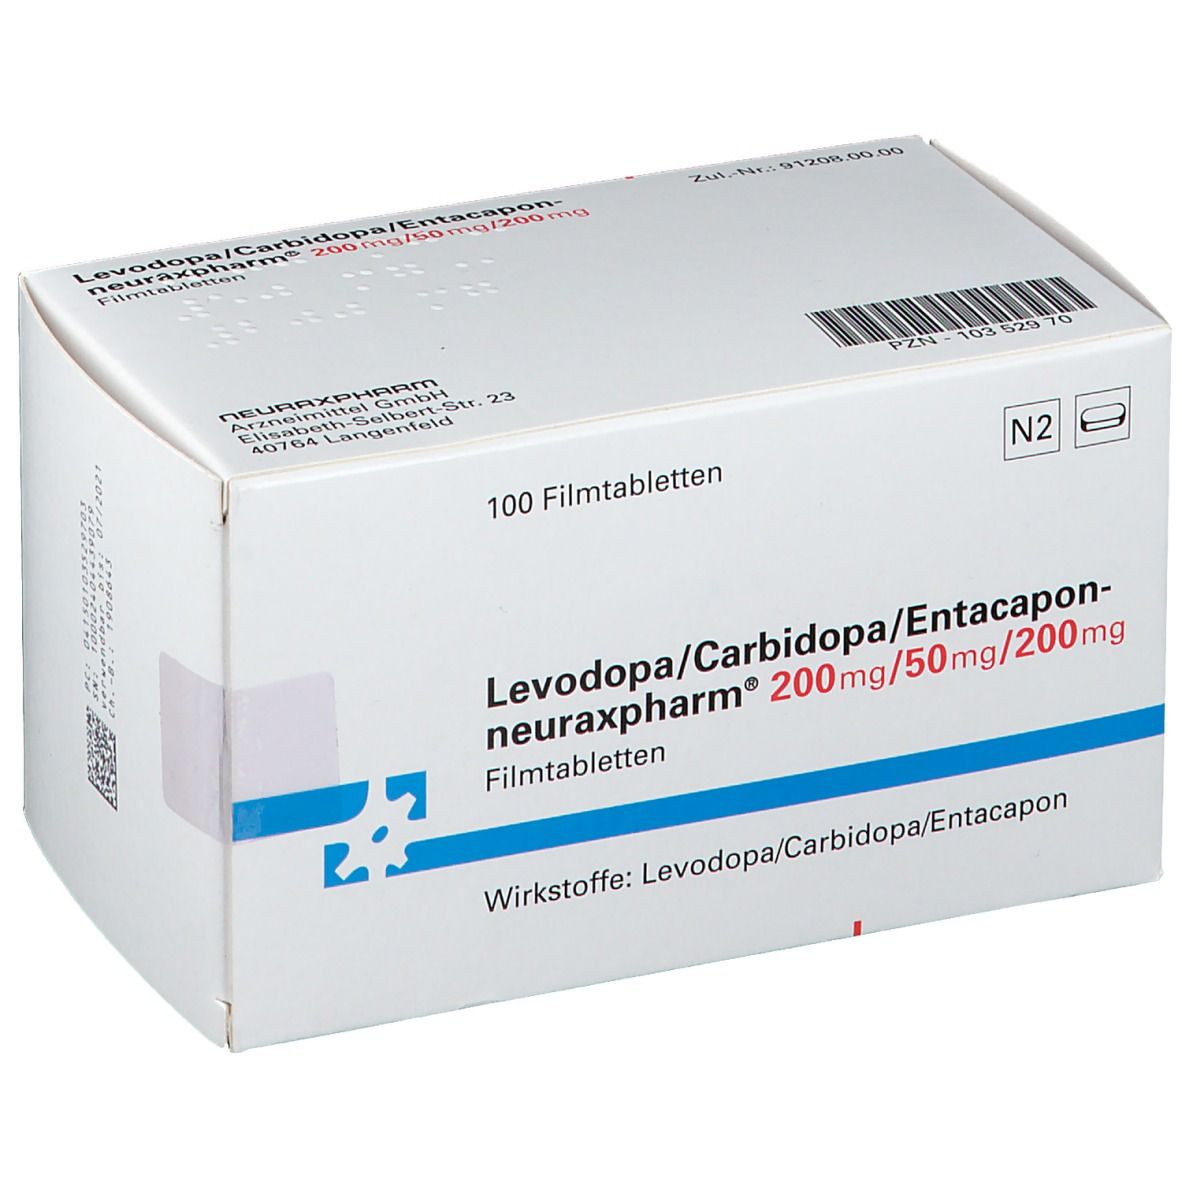 Levodopa/Carbidopa/Entacapon-neuraxpharm® 200 mg/50 mg/200 mg